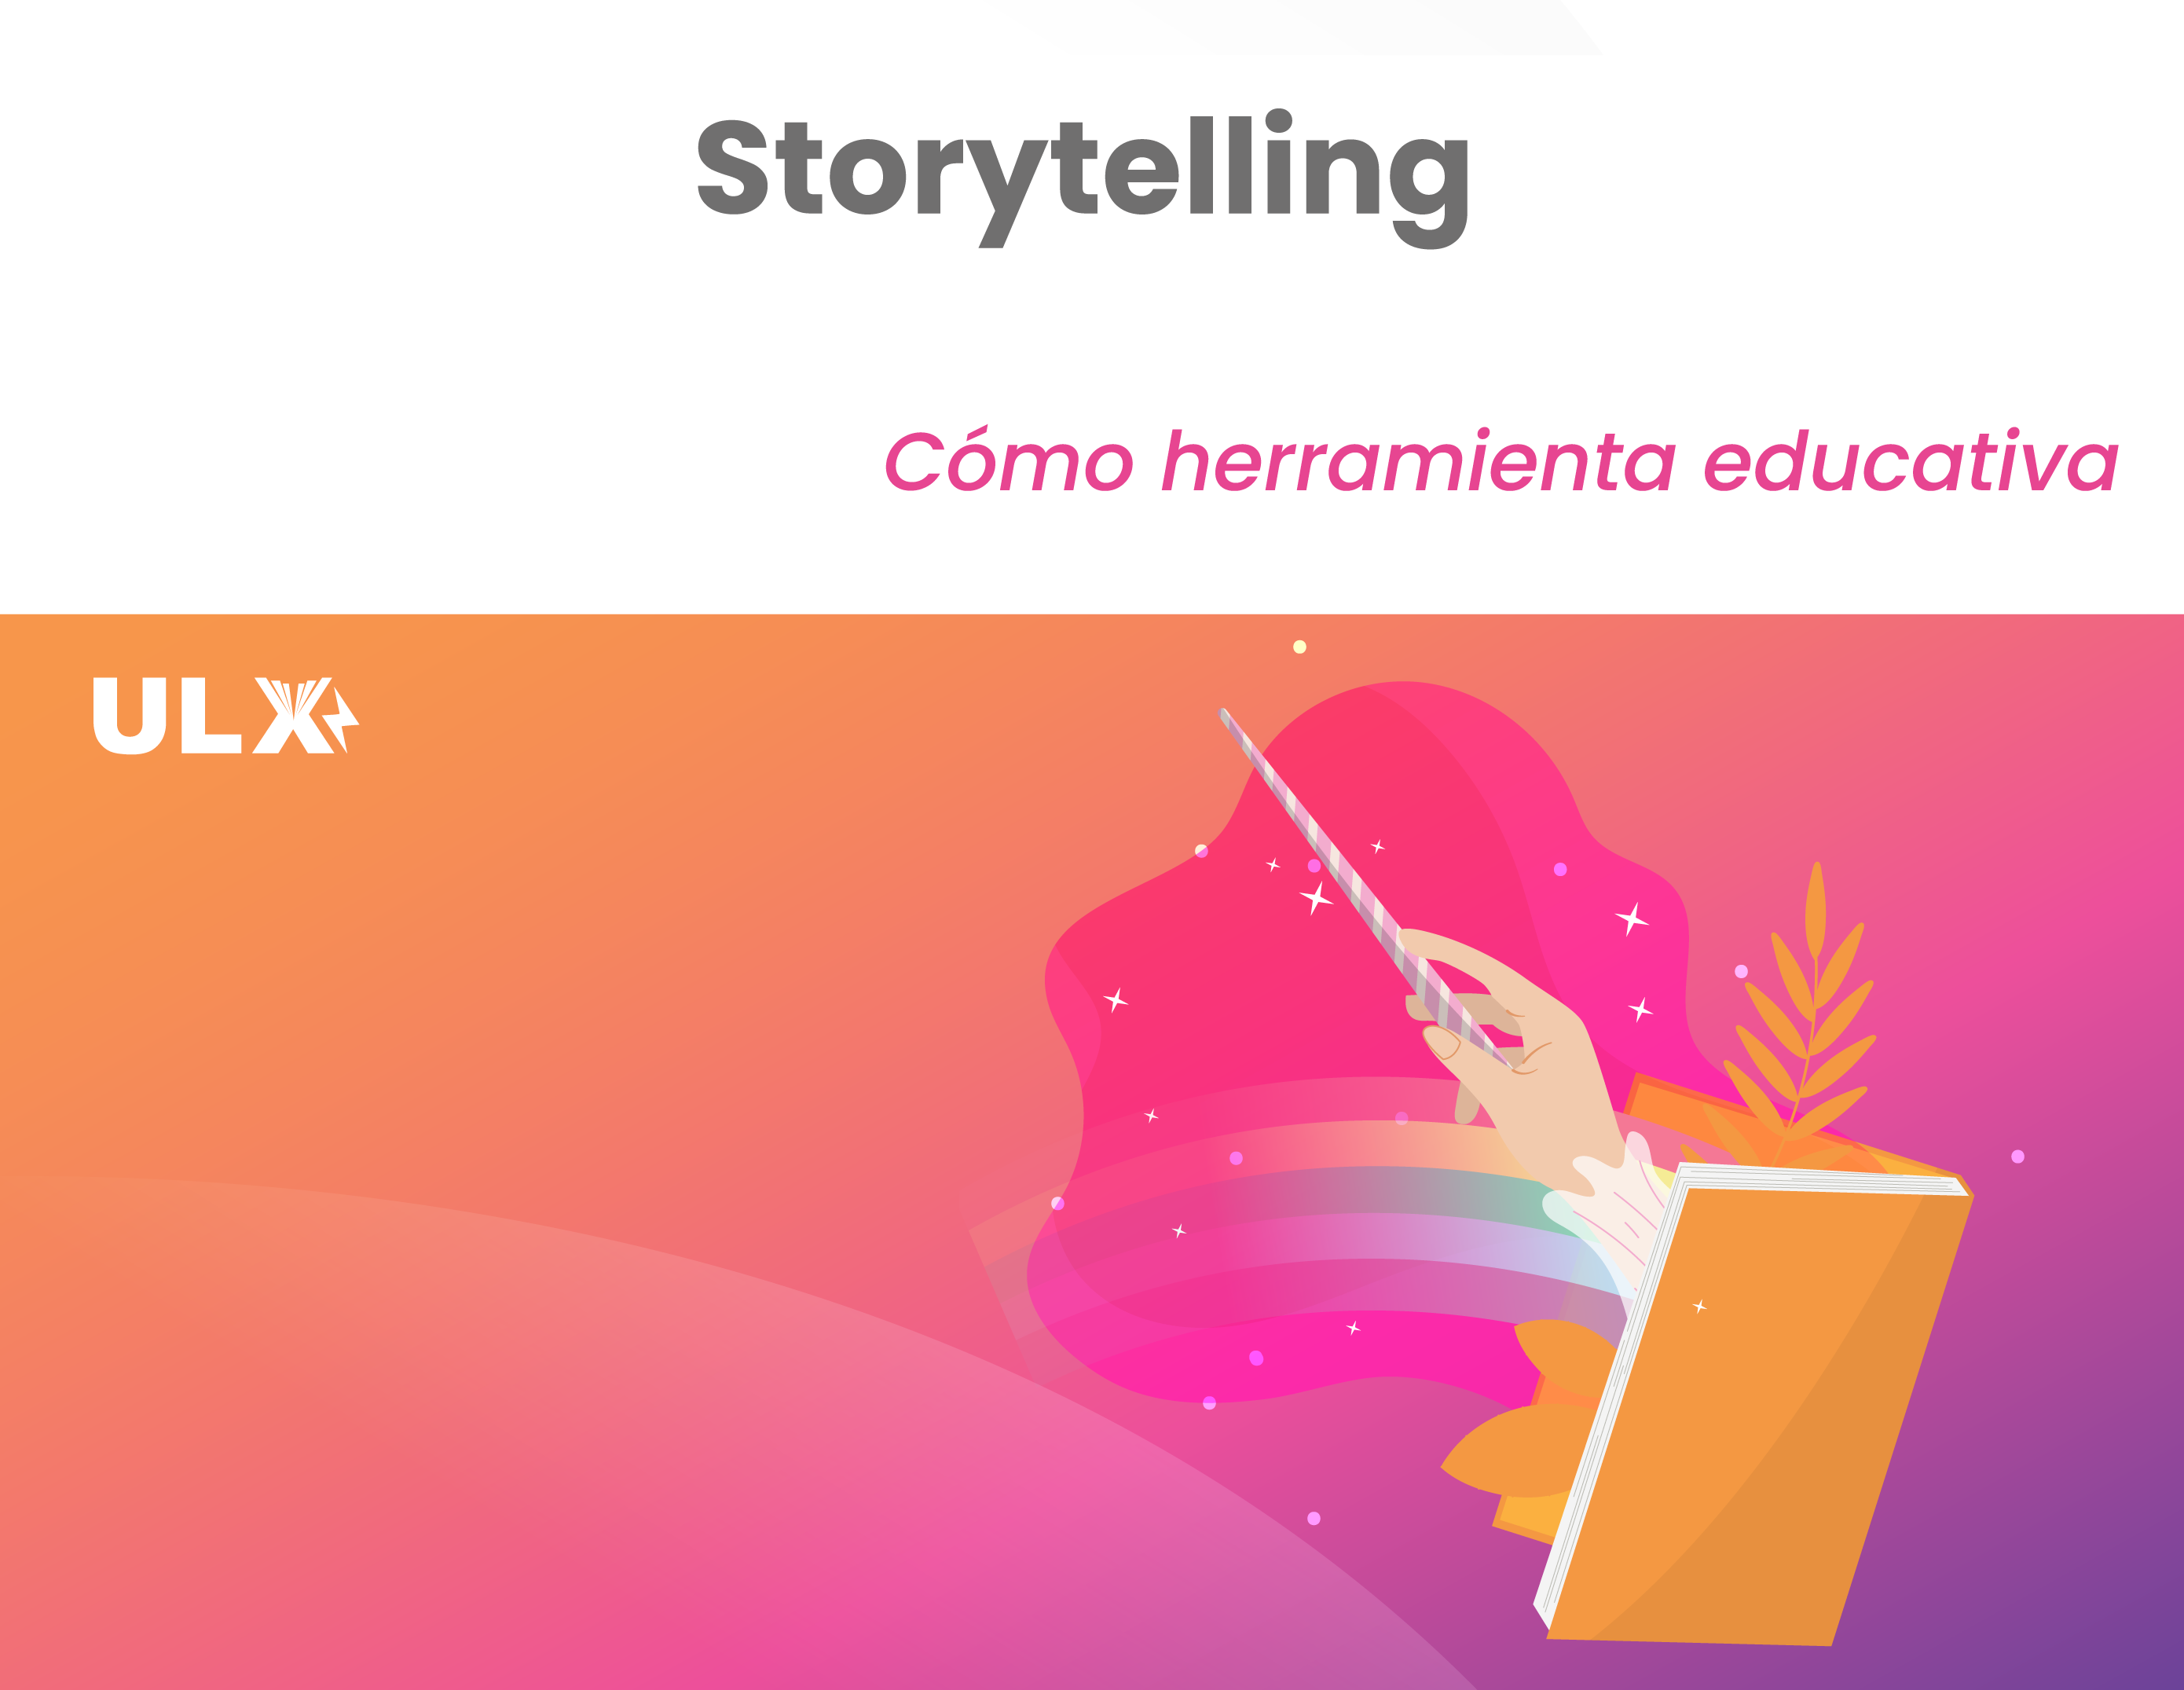 ULX Agile - Storytelling cómo herramienta educativa		